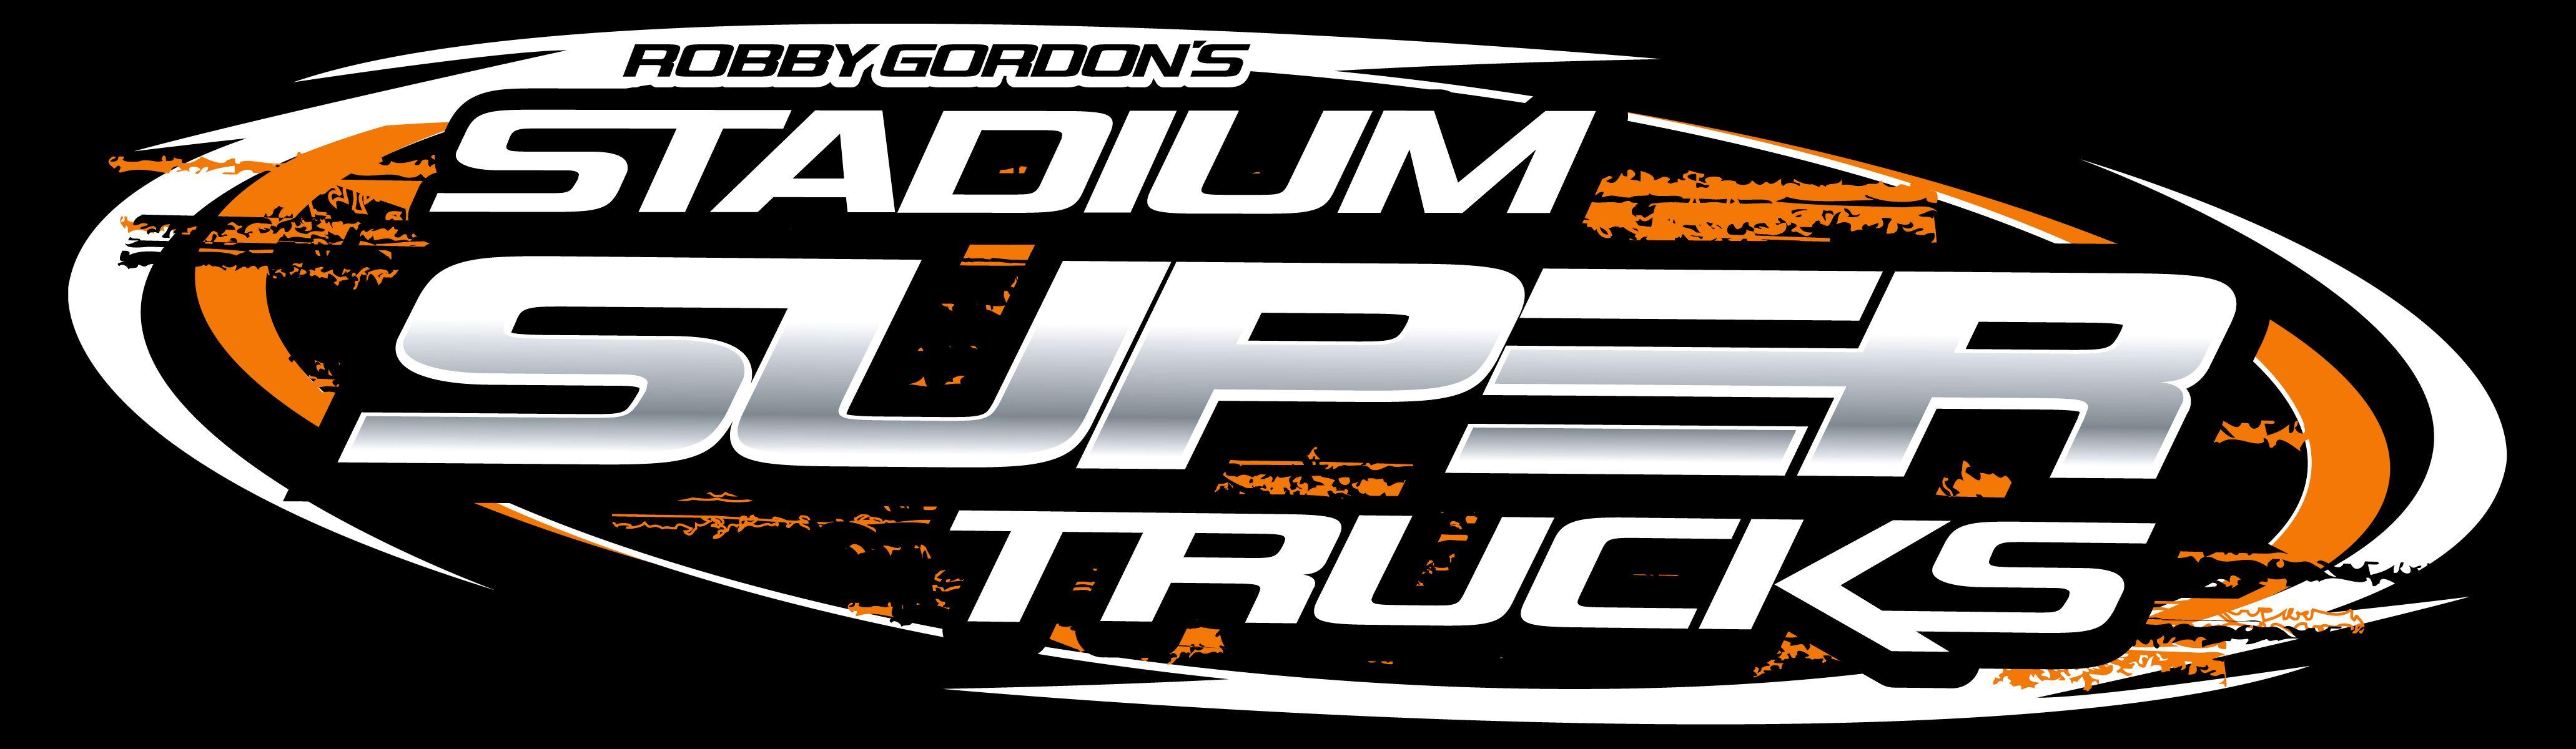 Off-Road Racing Logo - RobbyGordon.com - NEWS - ROBBY GORDON ANNOUNCES NEW OFF-ROAD RACING ...